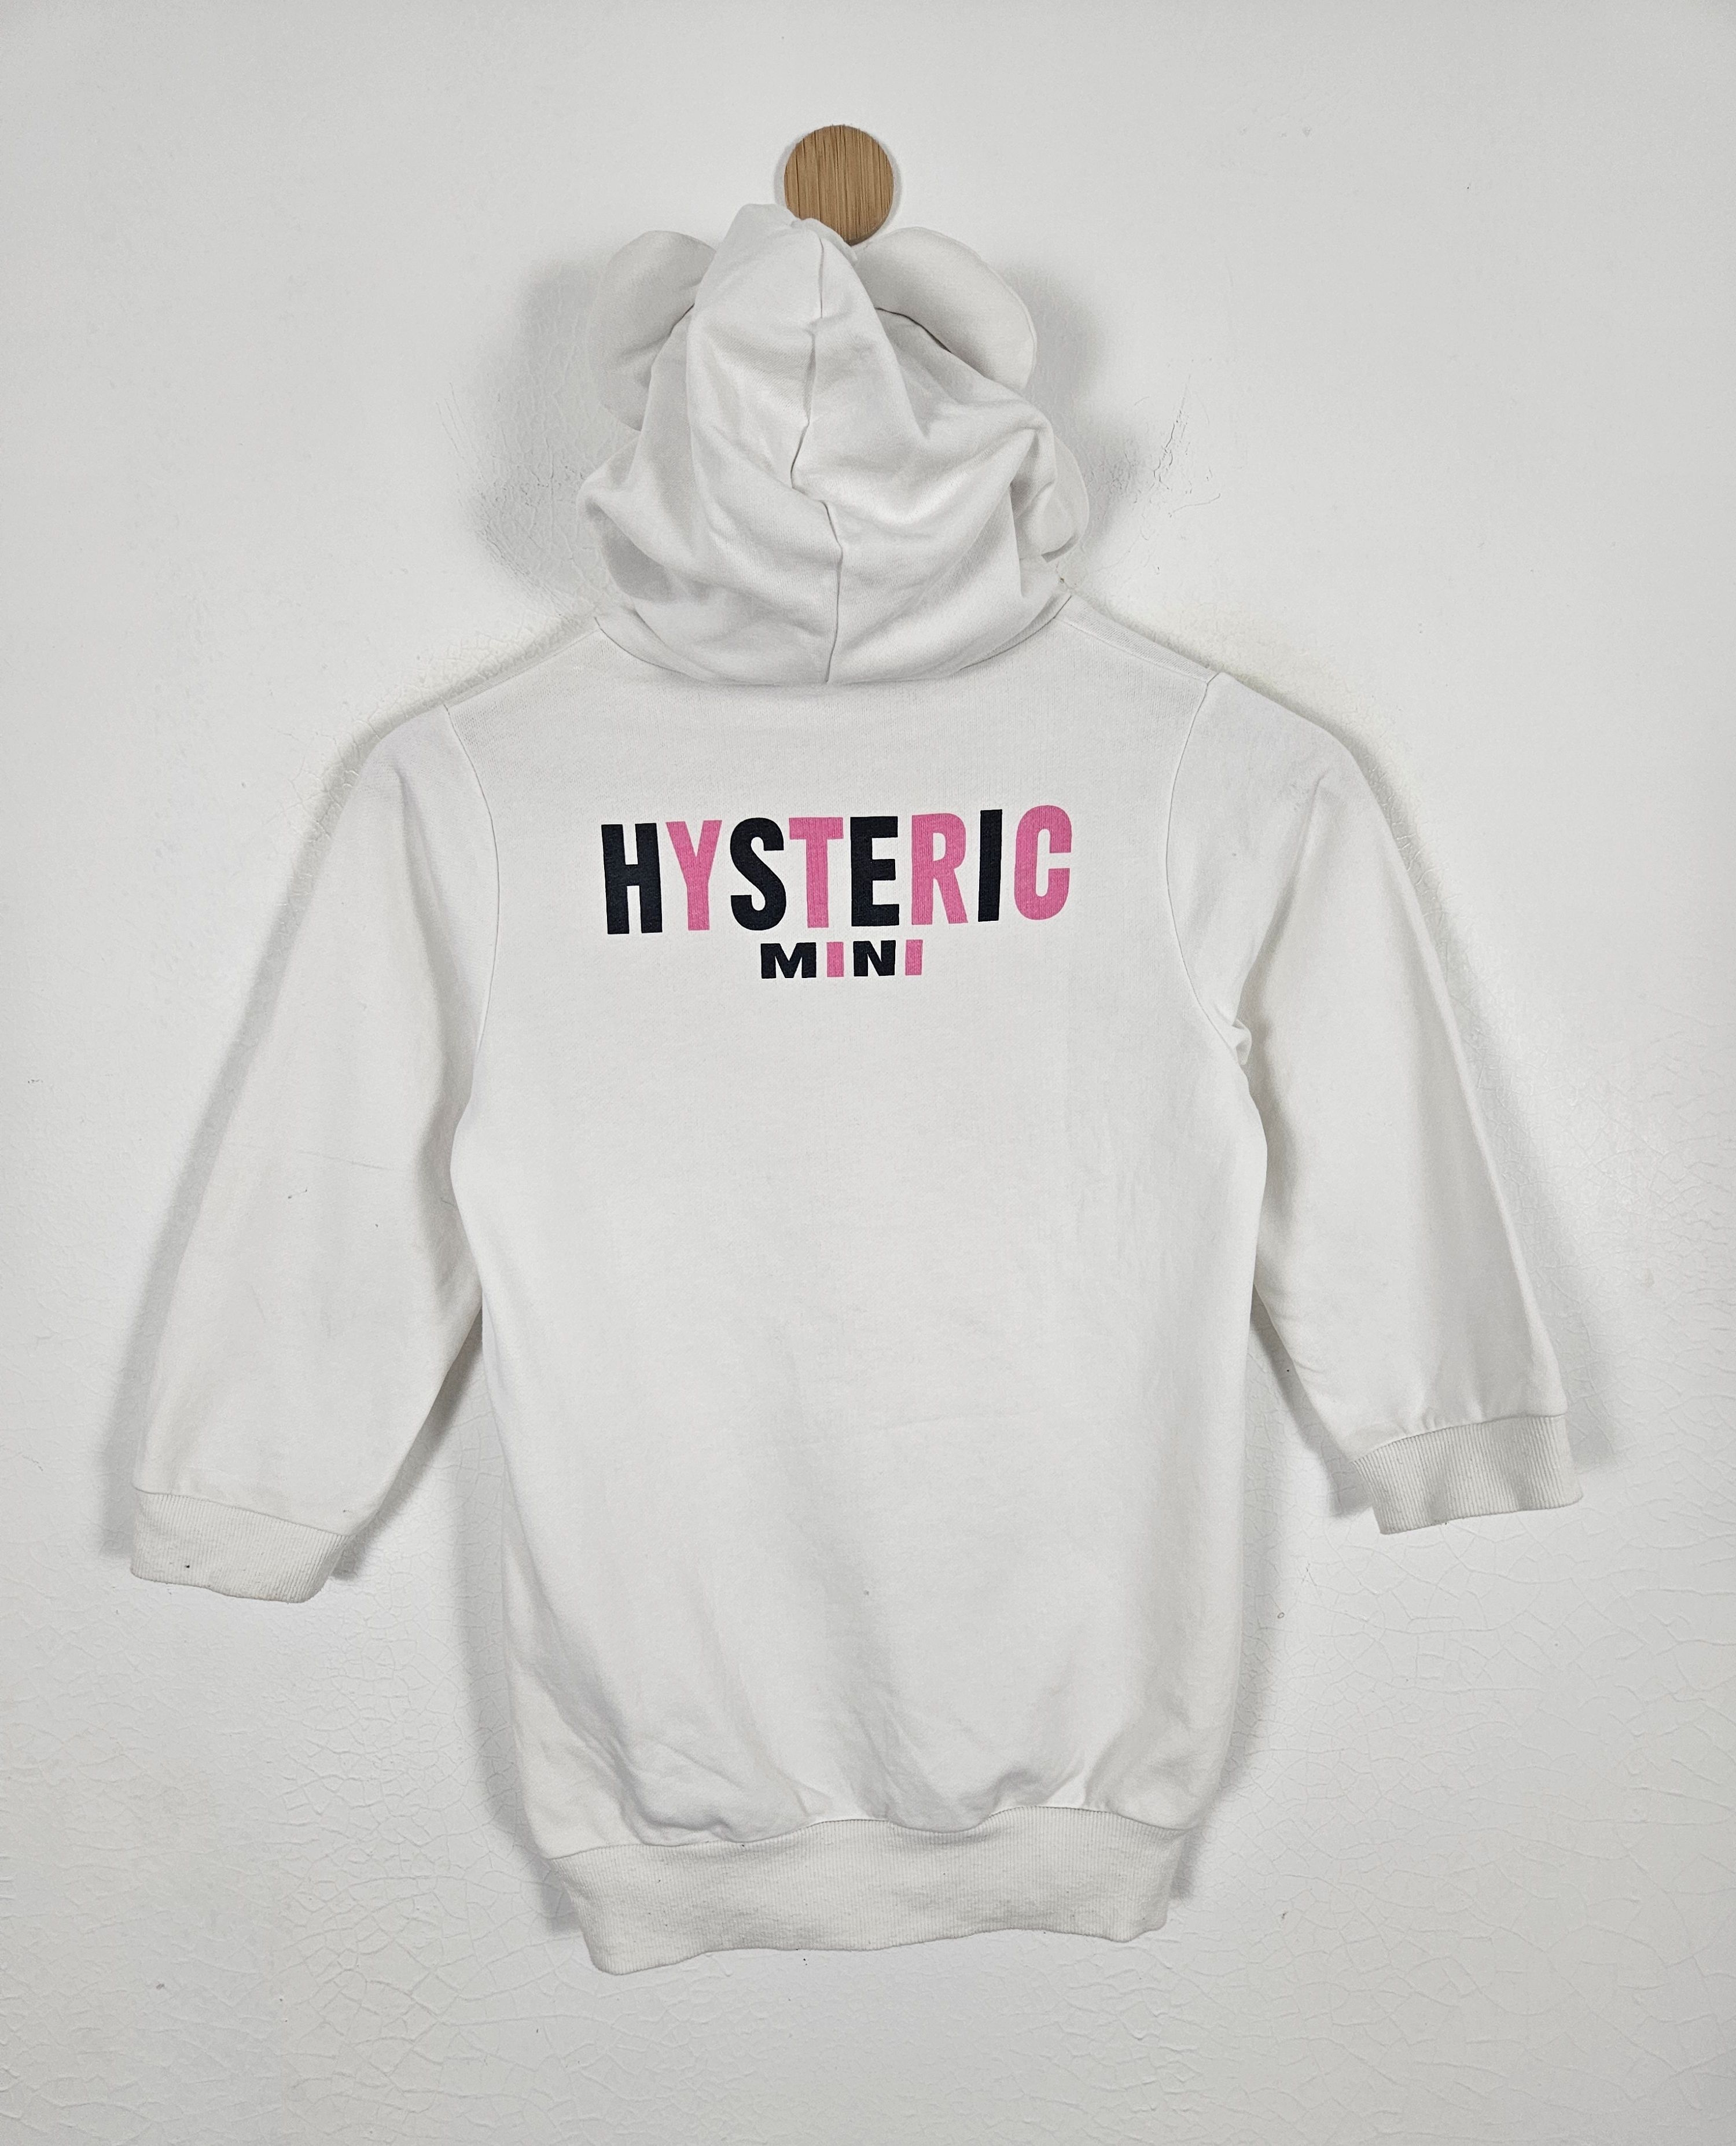 Hysteric Mini hoodie - 2